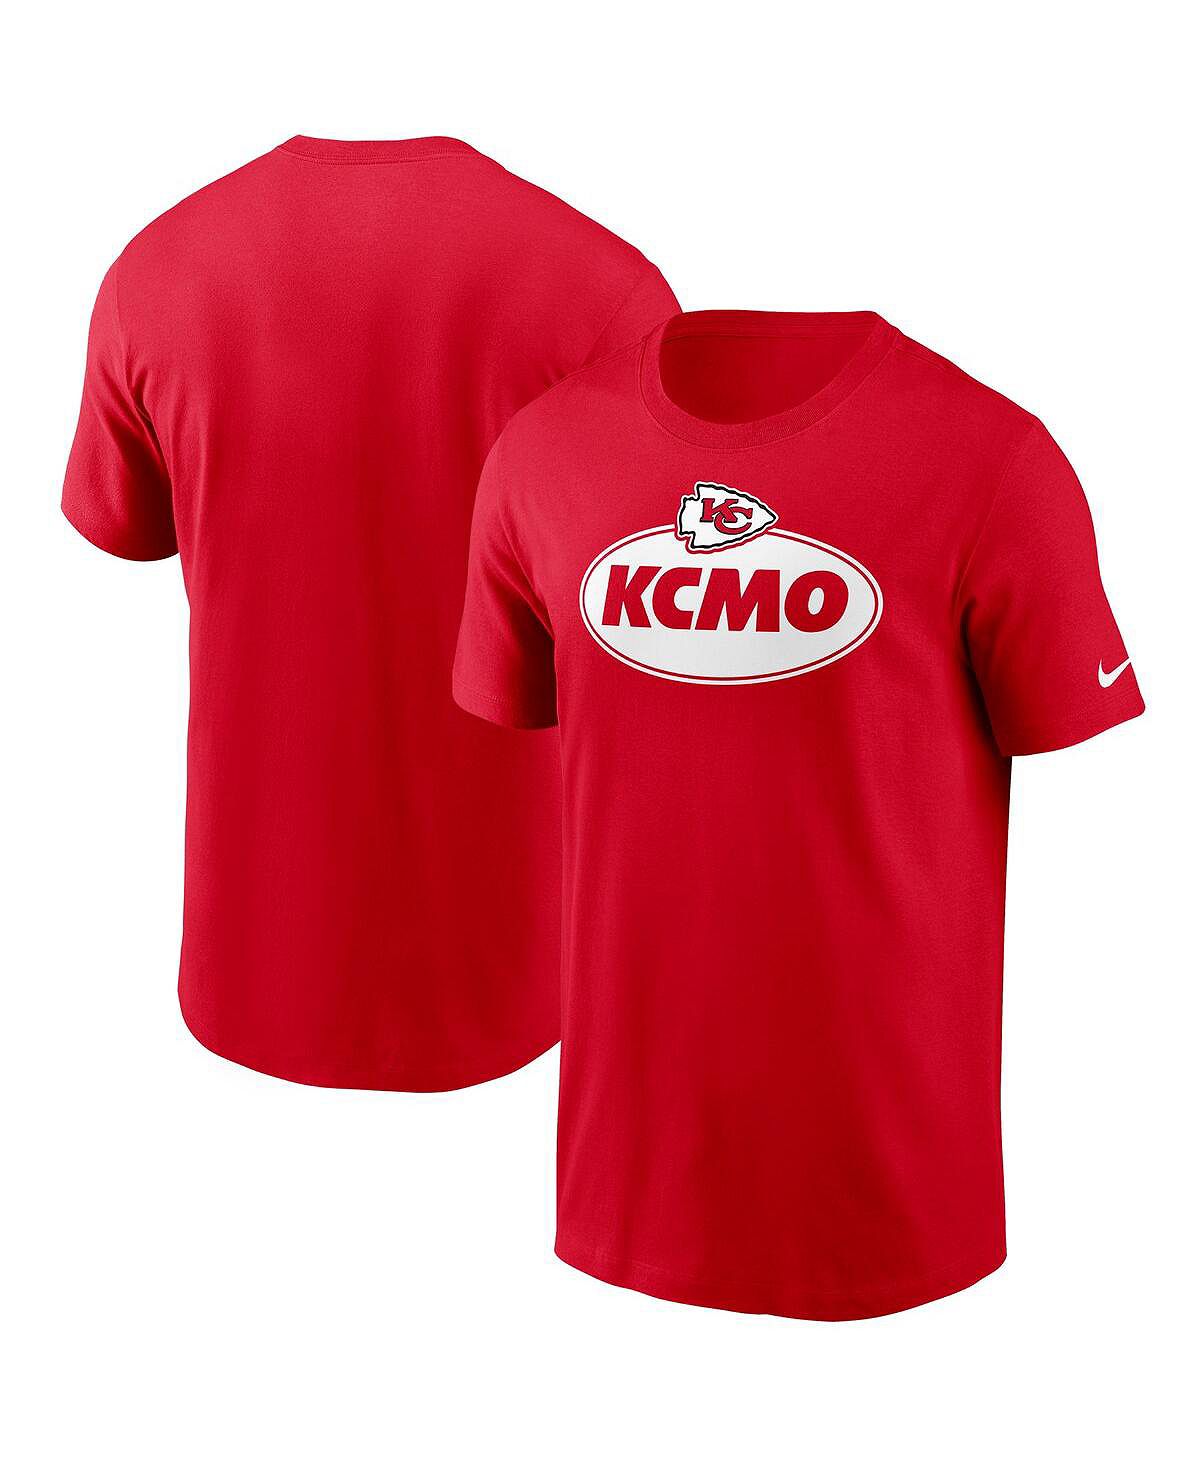 Мужская красная футболка kansas city chiefs hometown collection kcmo Nike, красный стул канзас сити